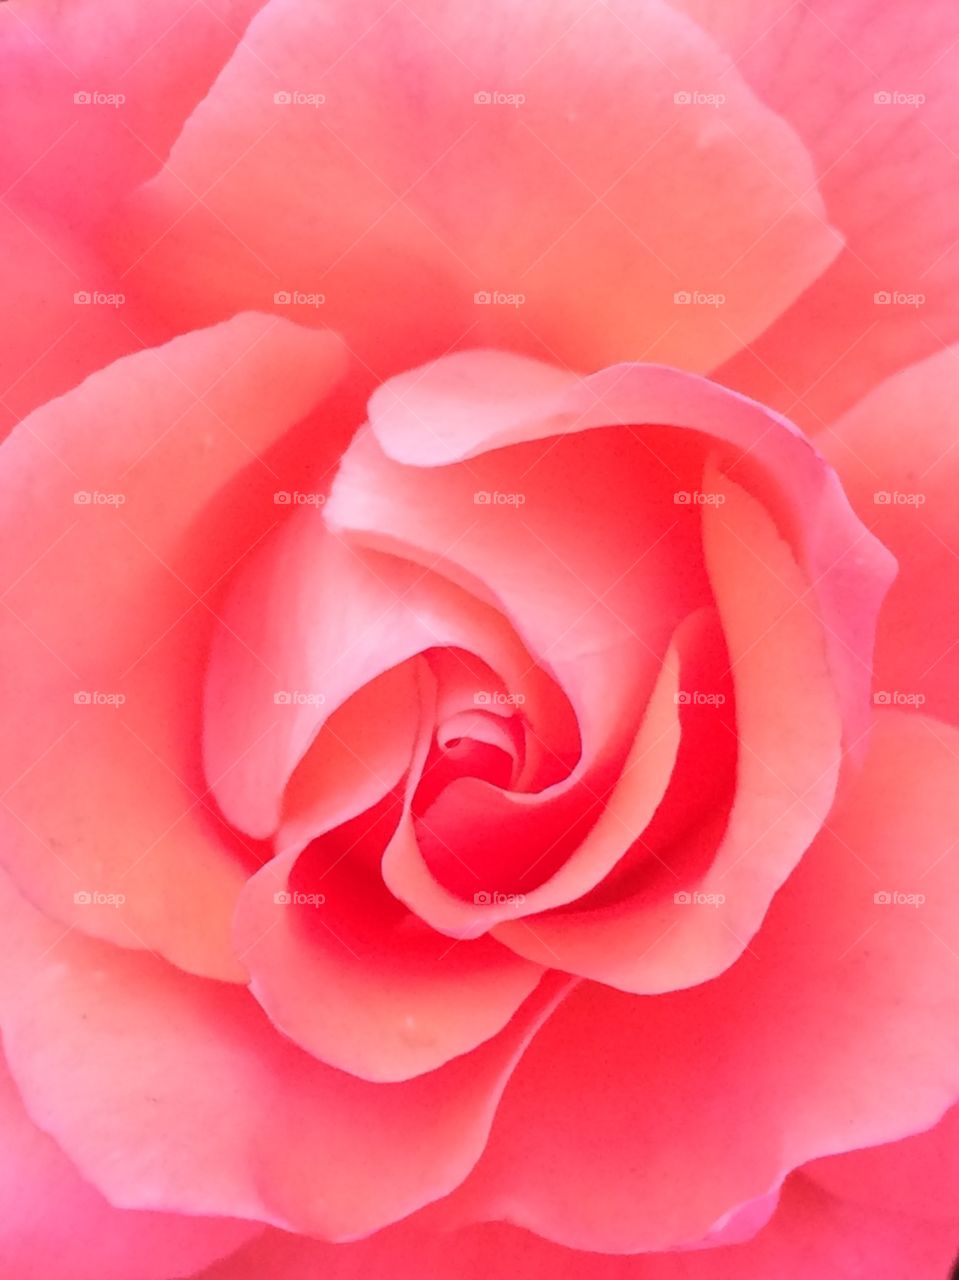 Rose up close
